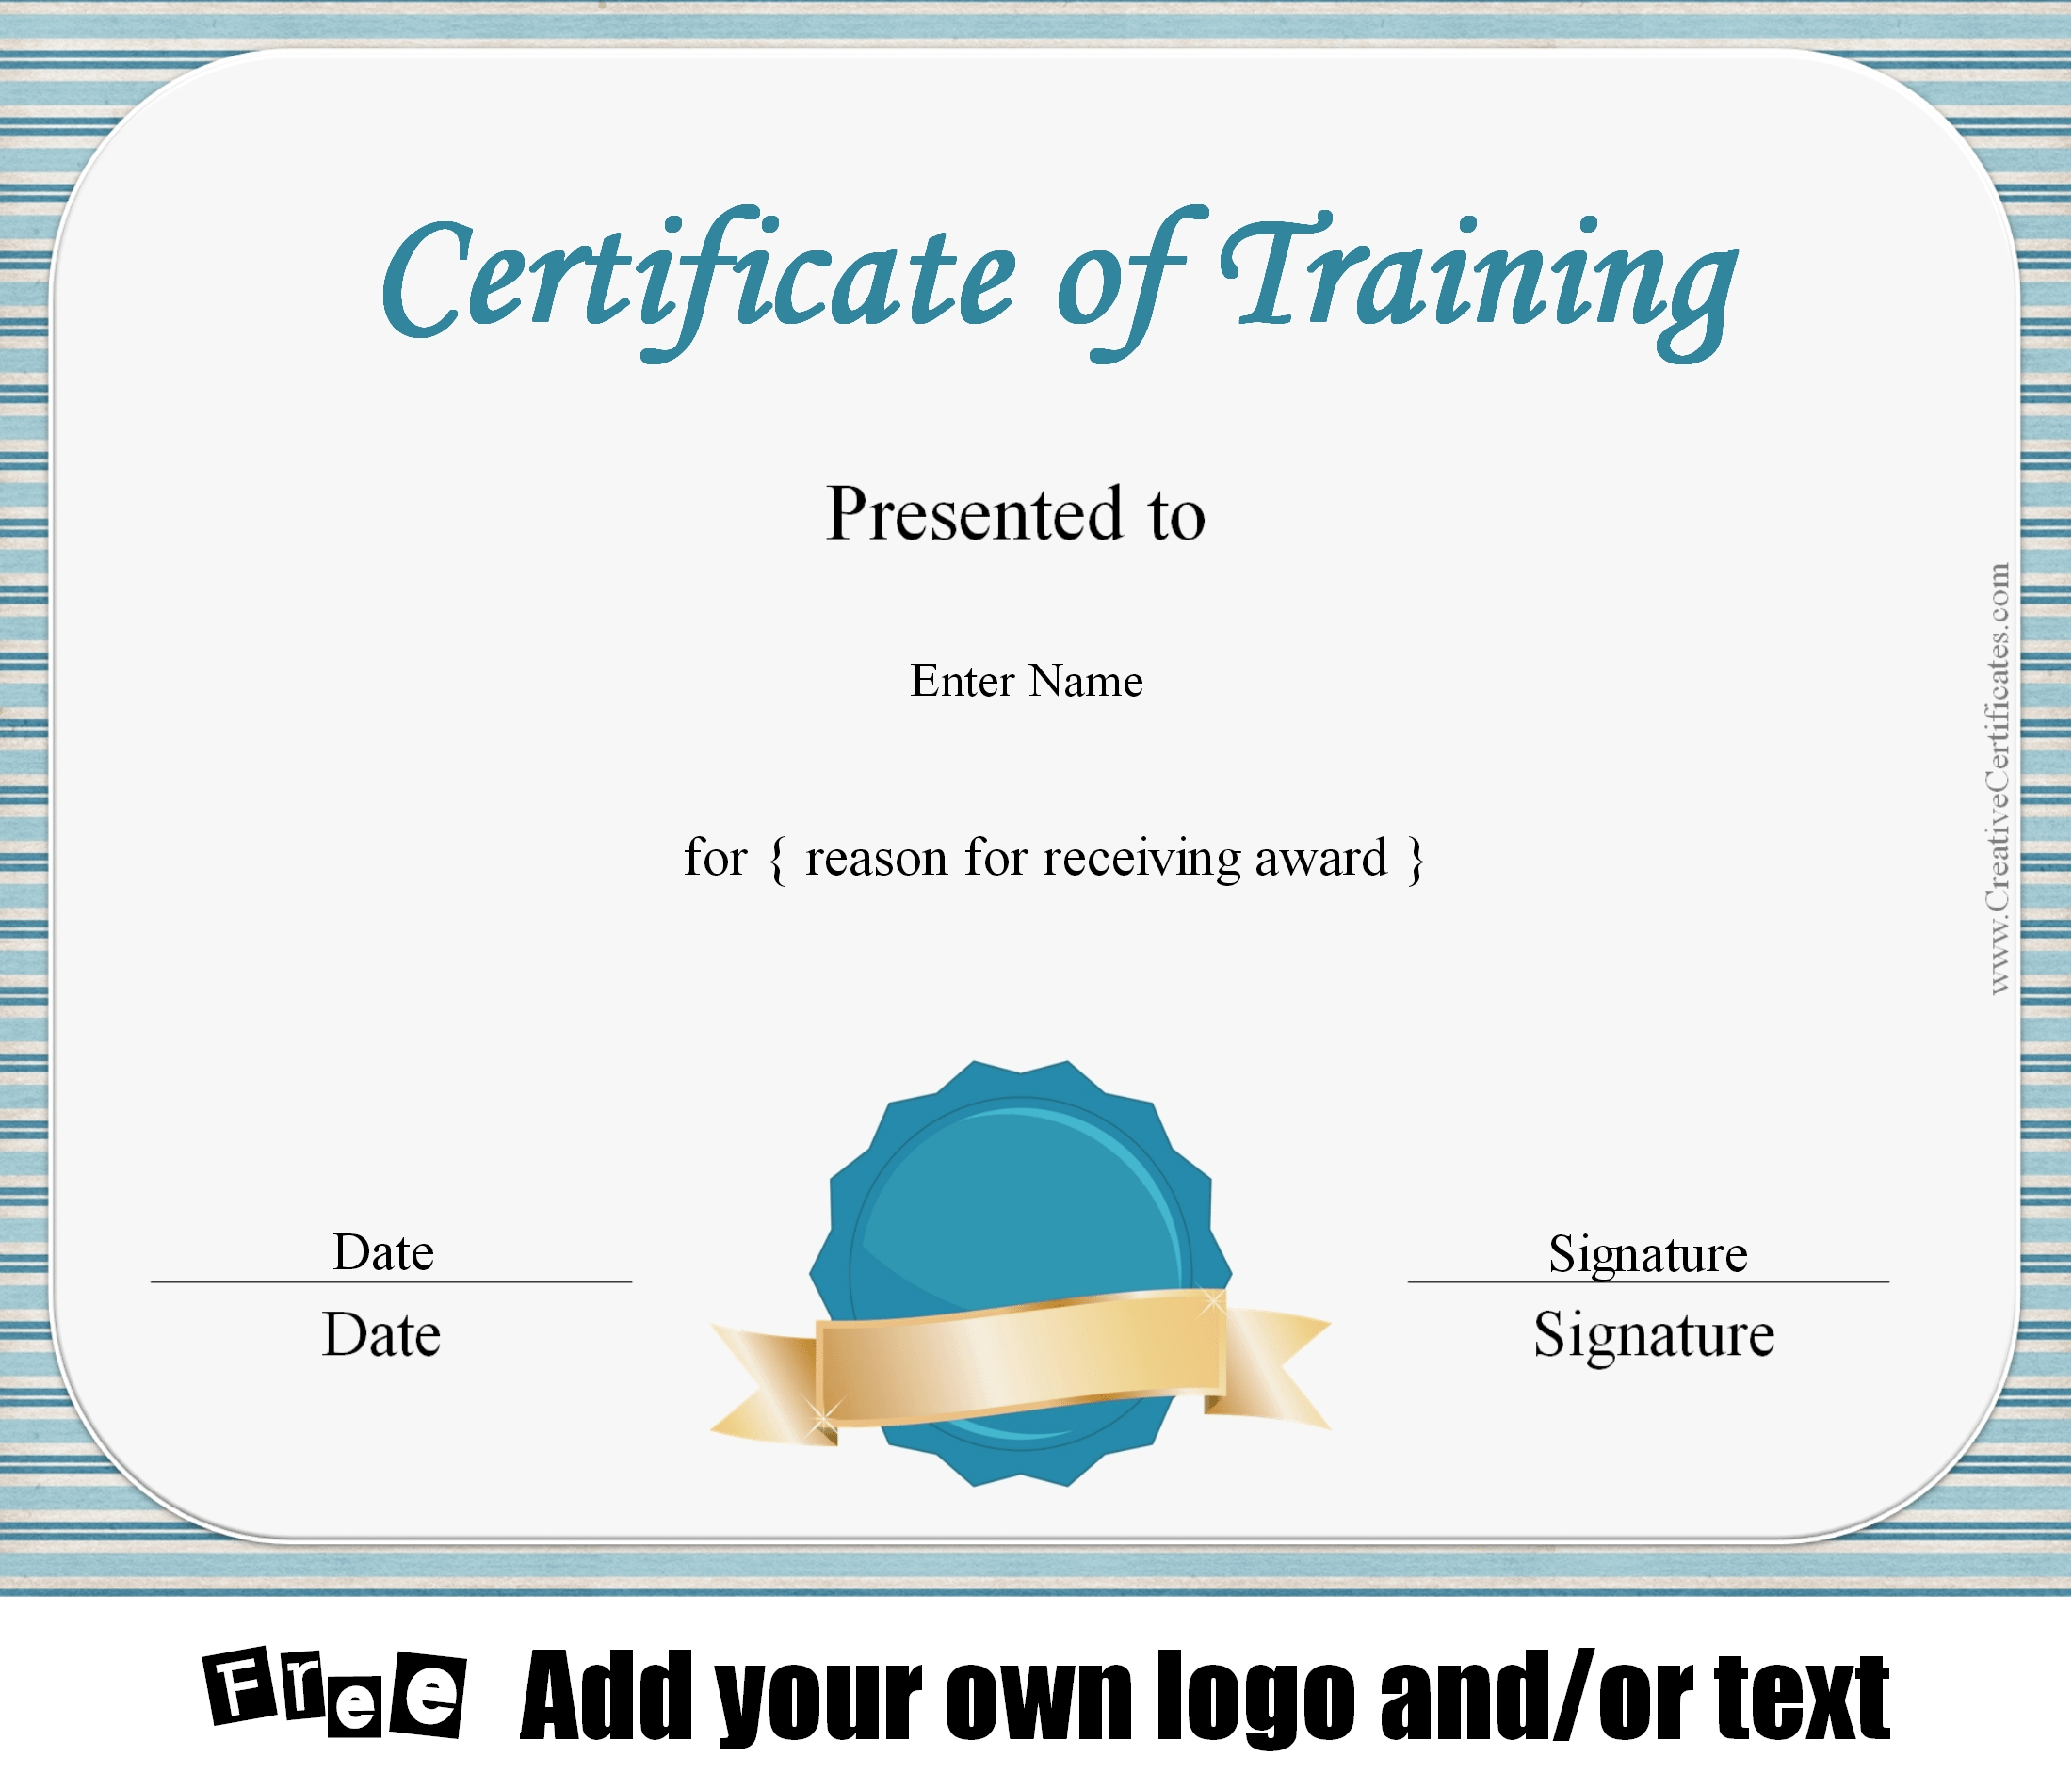 Free Certificate of Training Template Customizable